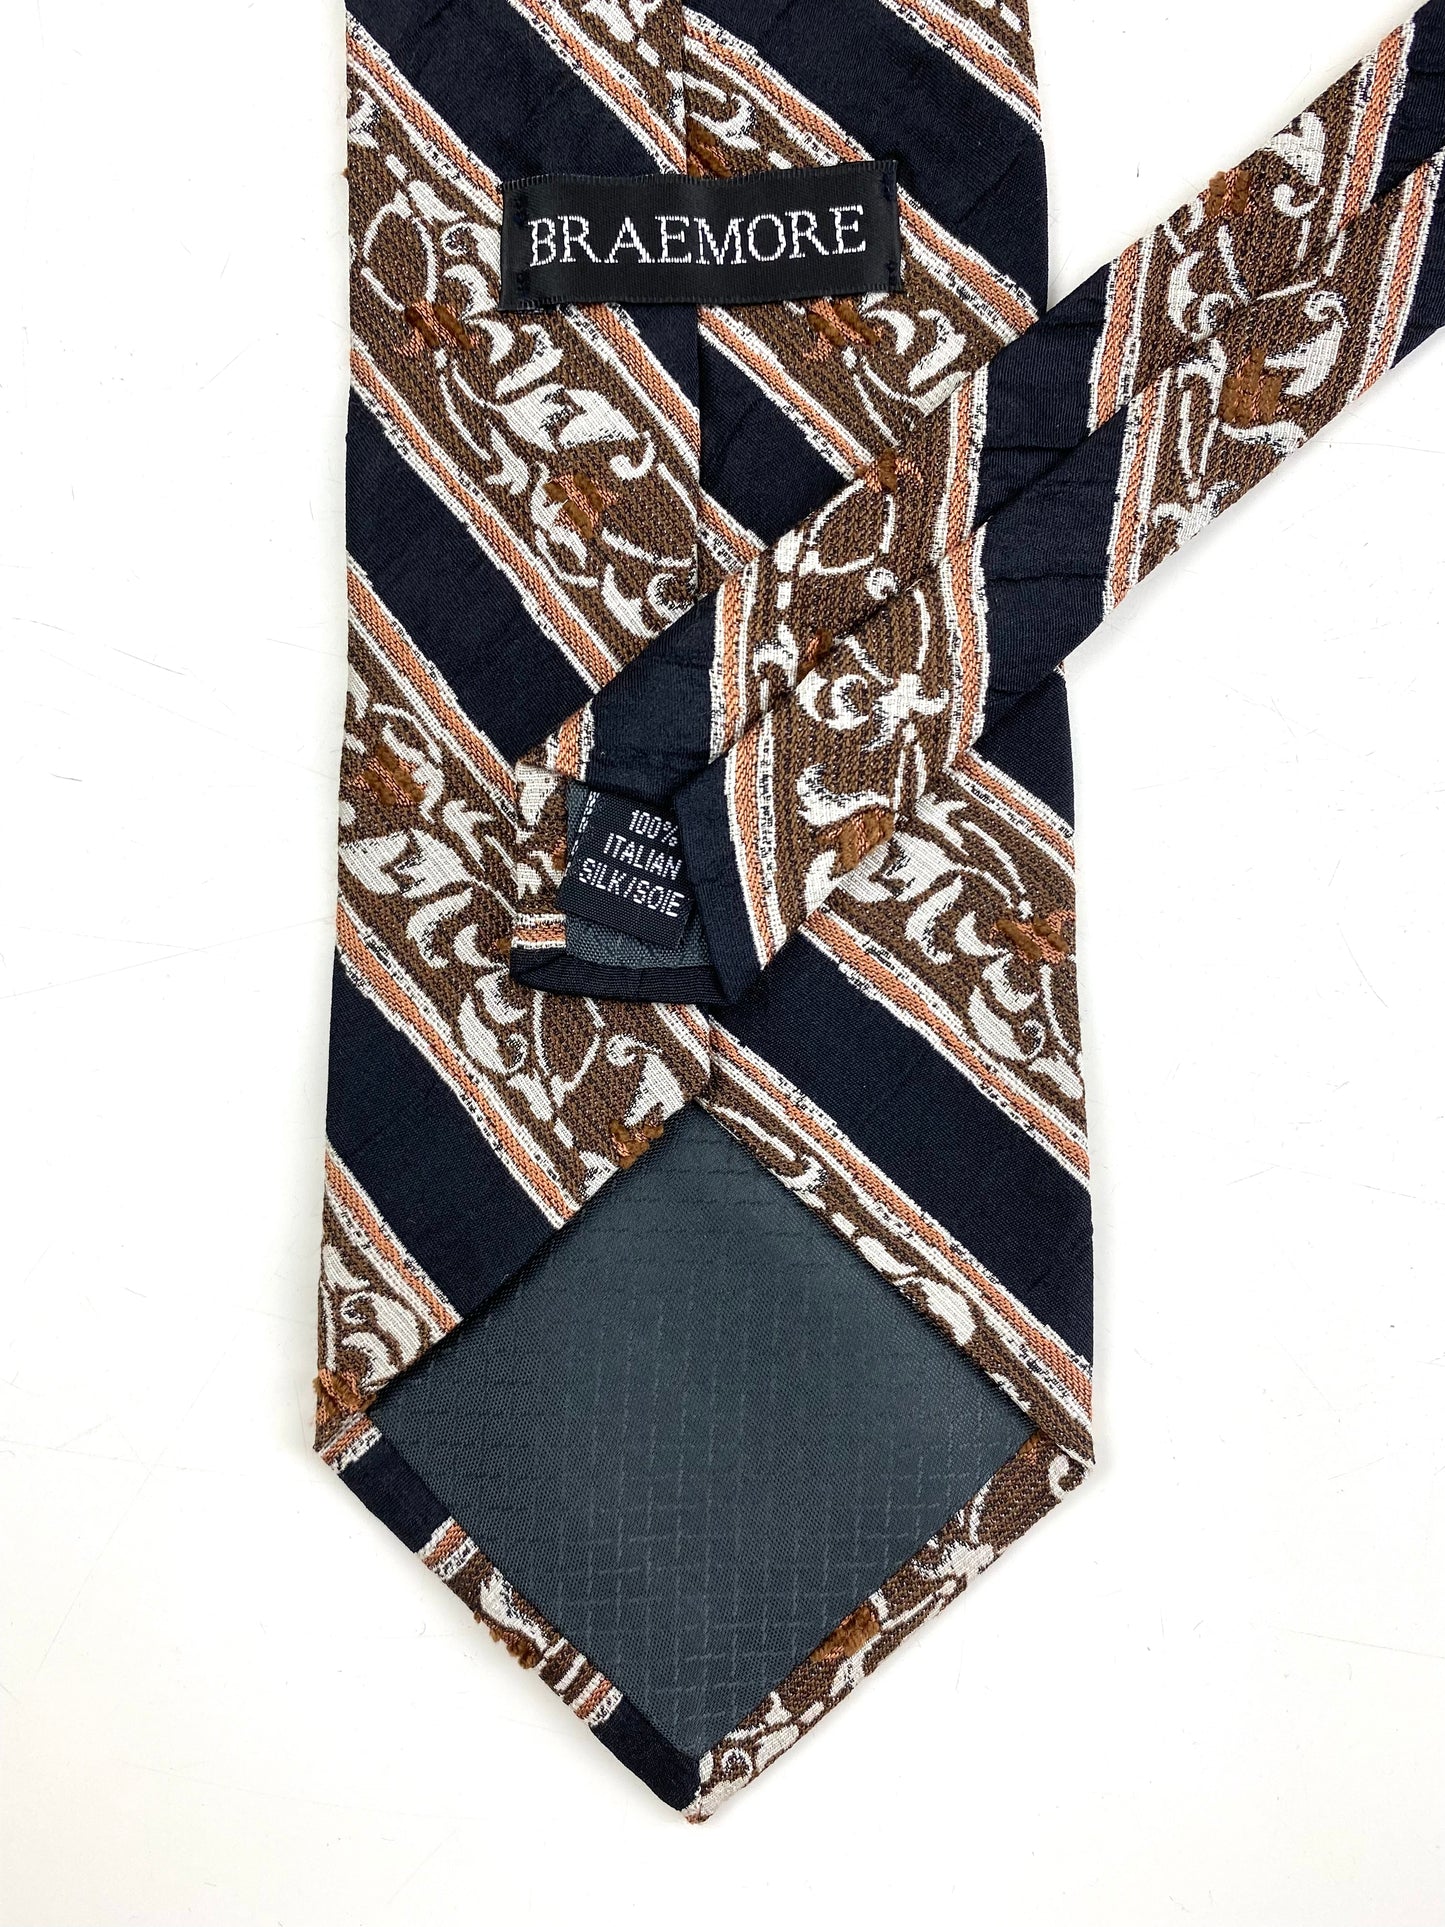 90s Deadstock Silk Necktie, Vintage Black Brown Diagonal Stripe With Filigree, NOS